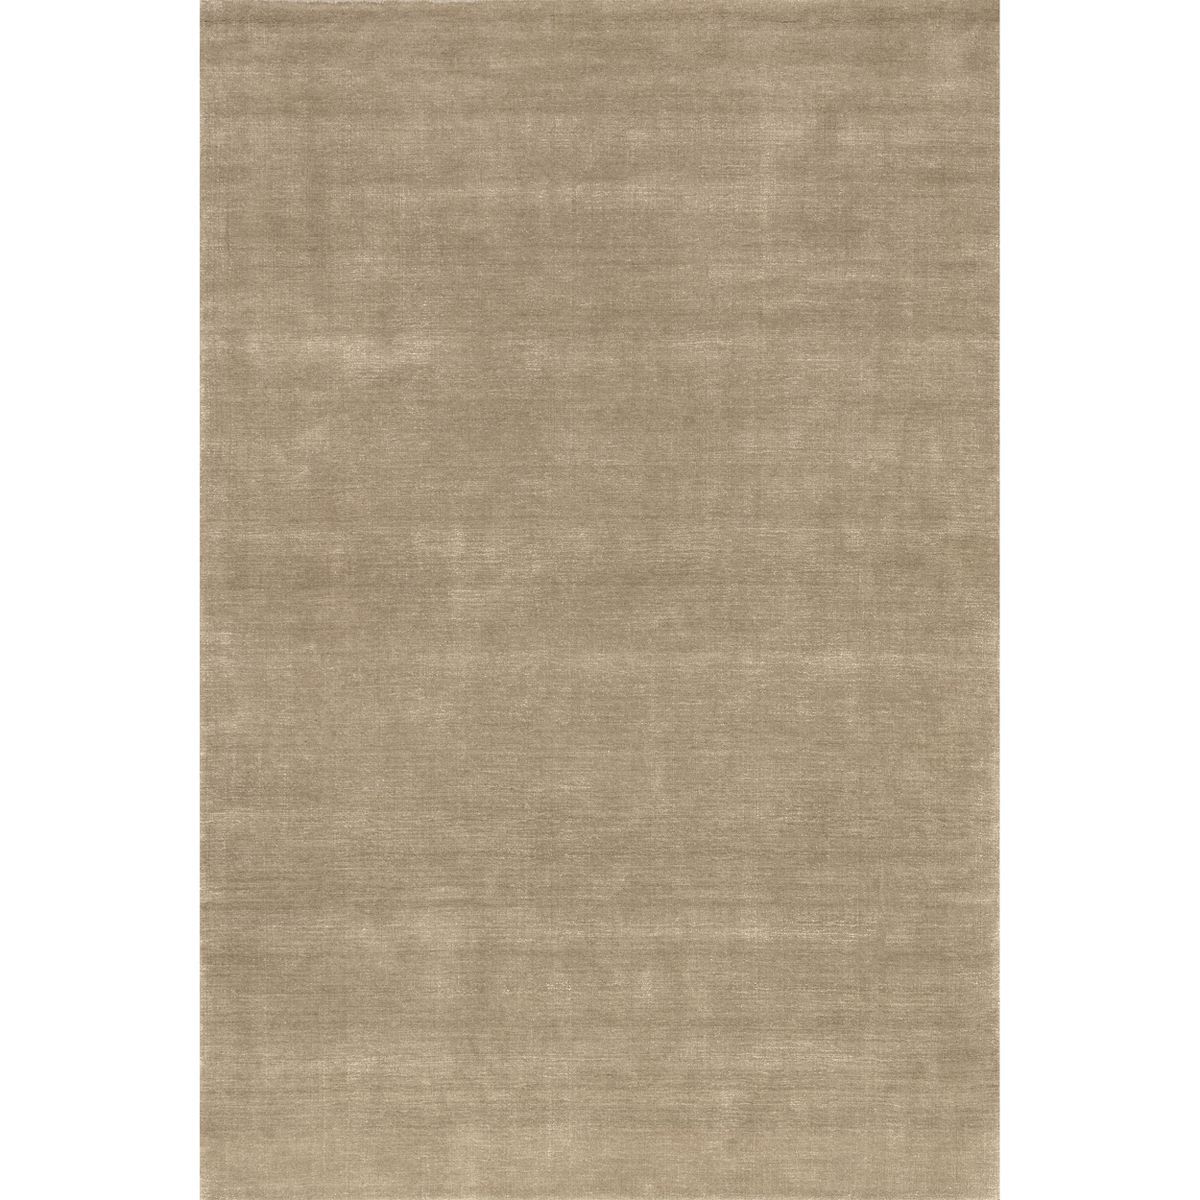 Arvin Olano x RugsUSA - Arrel Speckled Wool-Blend Area Rug, 8' x 10', Taupe | Target